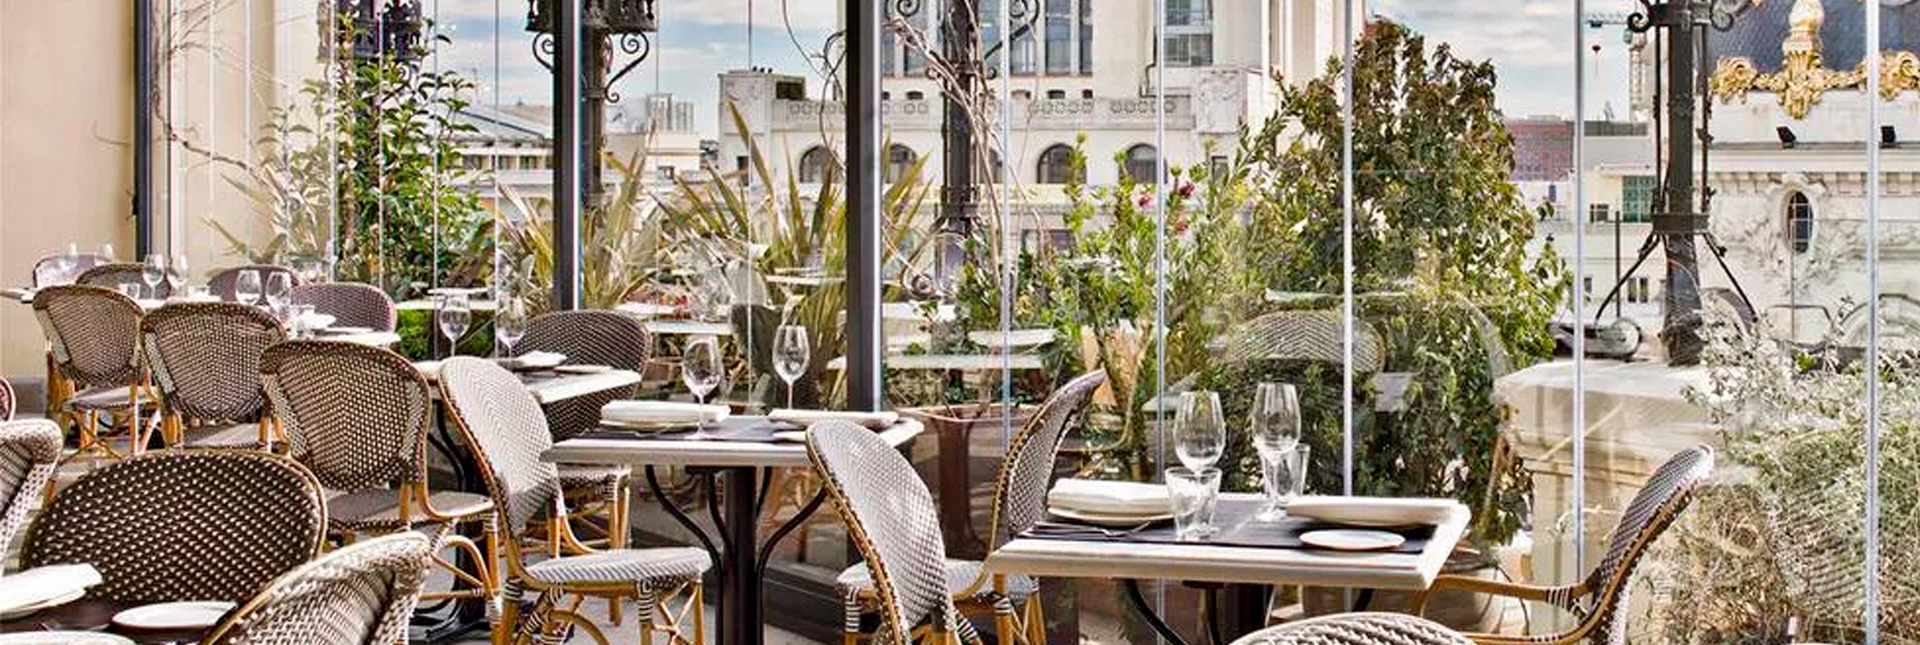 Restaurantes románticos Madrid